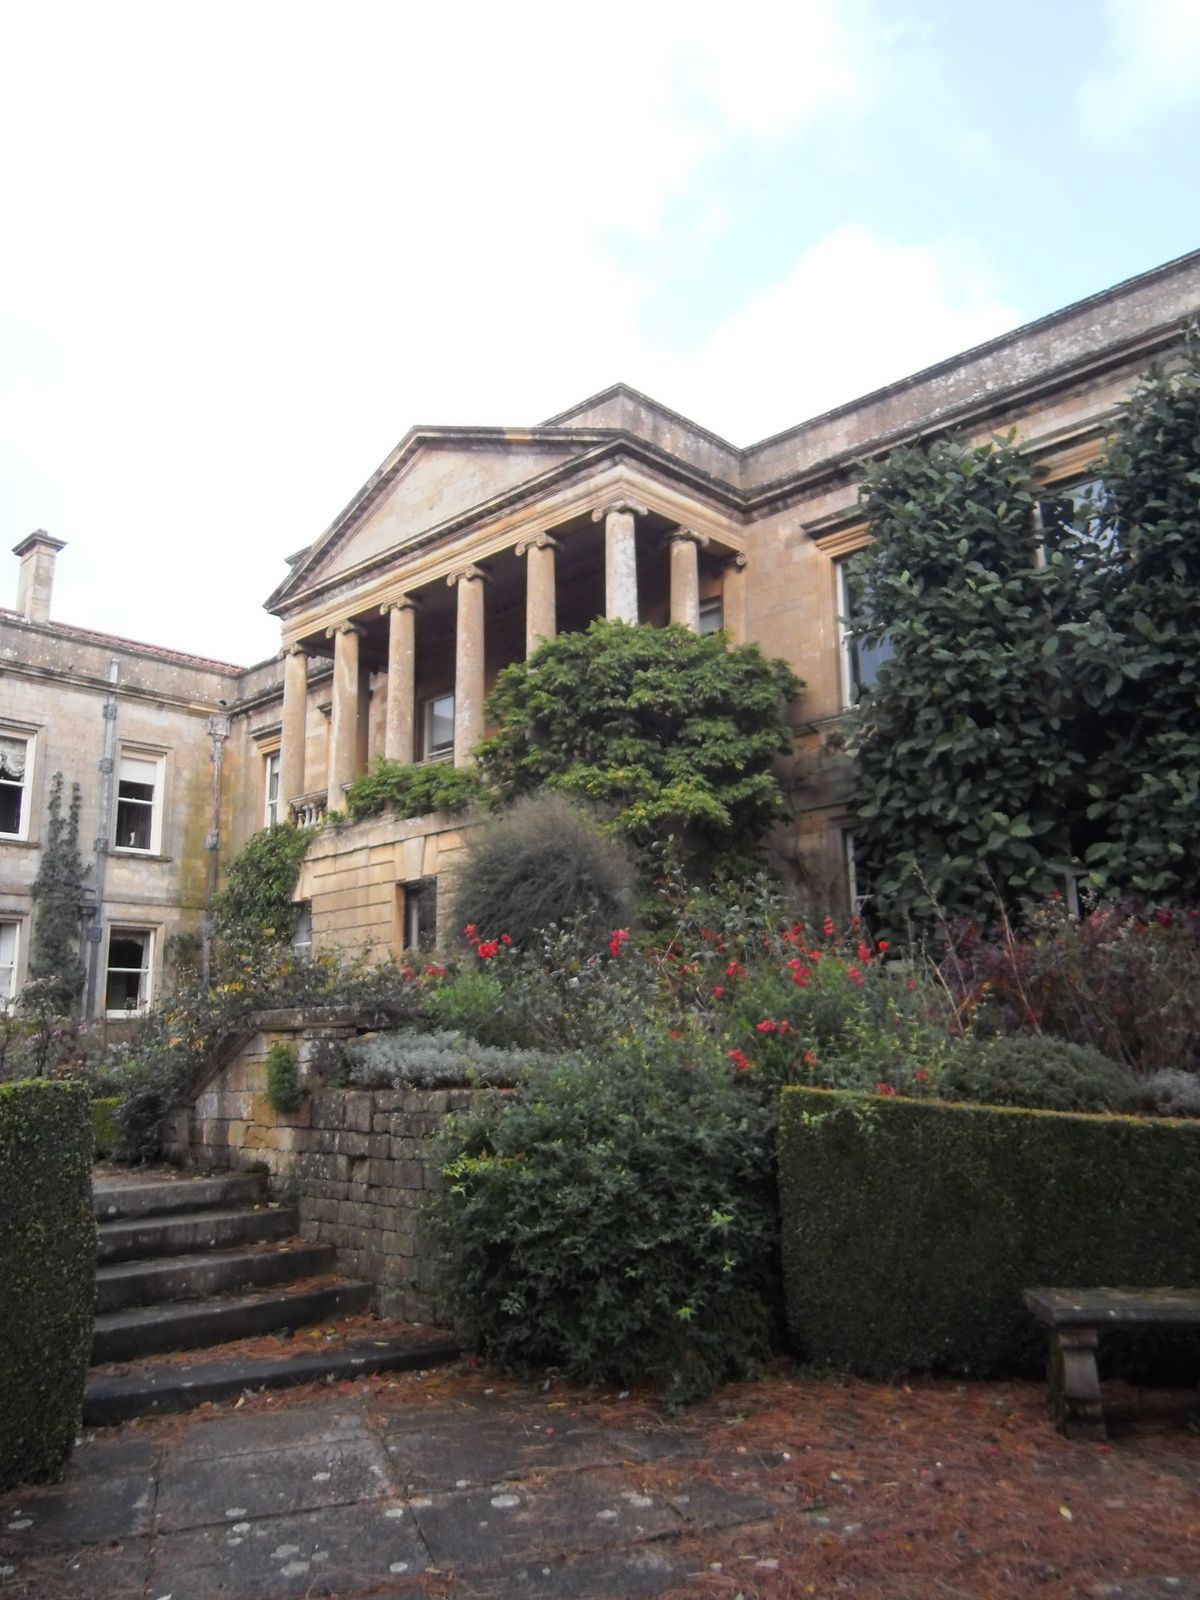 Kiftsgate Court Gardens – Cotswolds